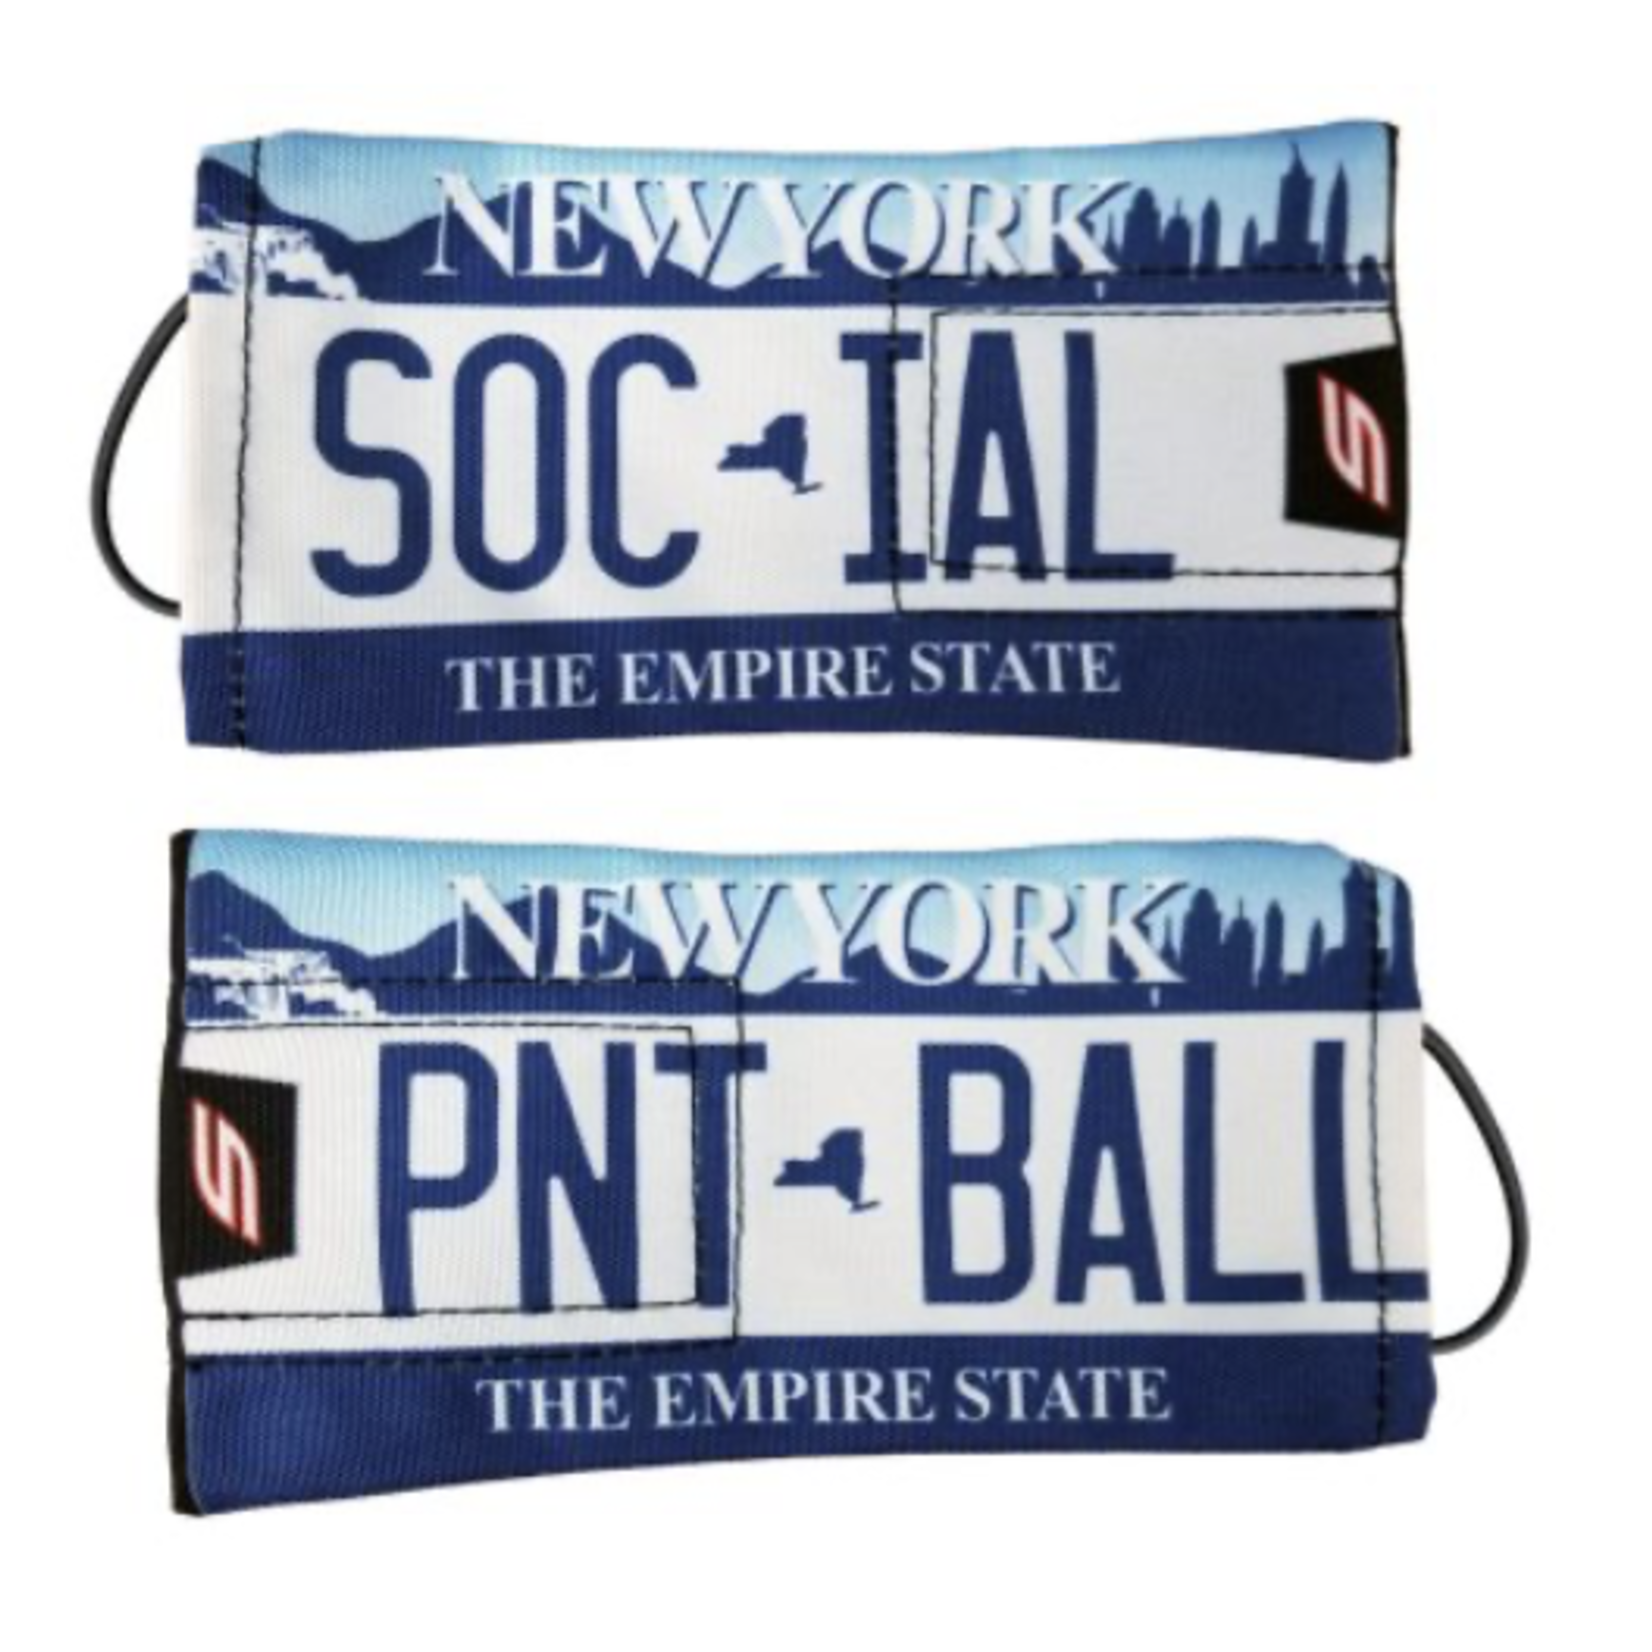 Social Paintball Social Paintball Barrel Cover